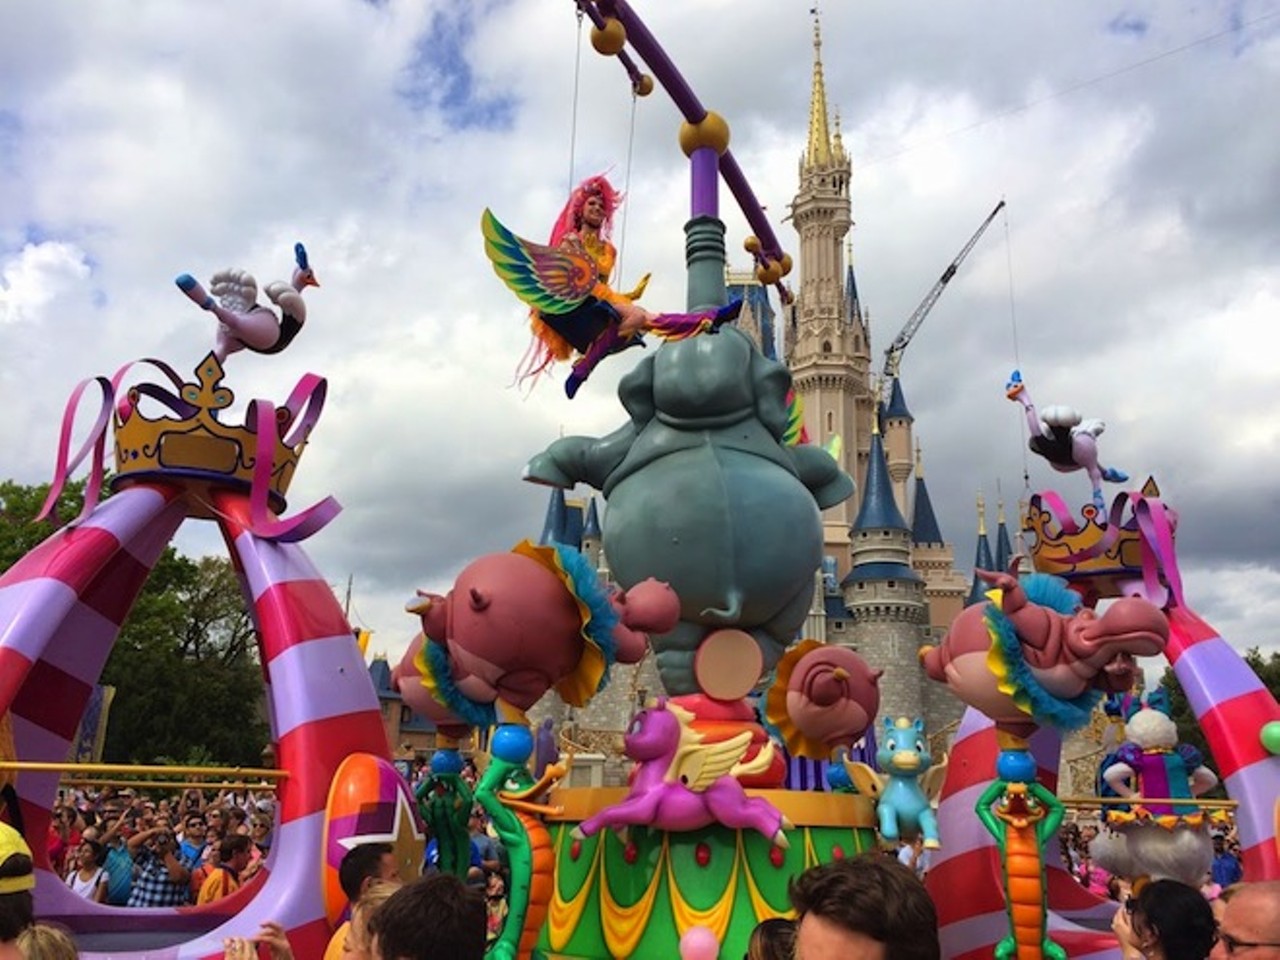 20 fairy-tale photos from Magic Kingdom's Festival of Fantasy